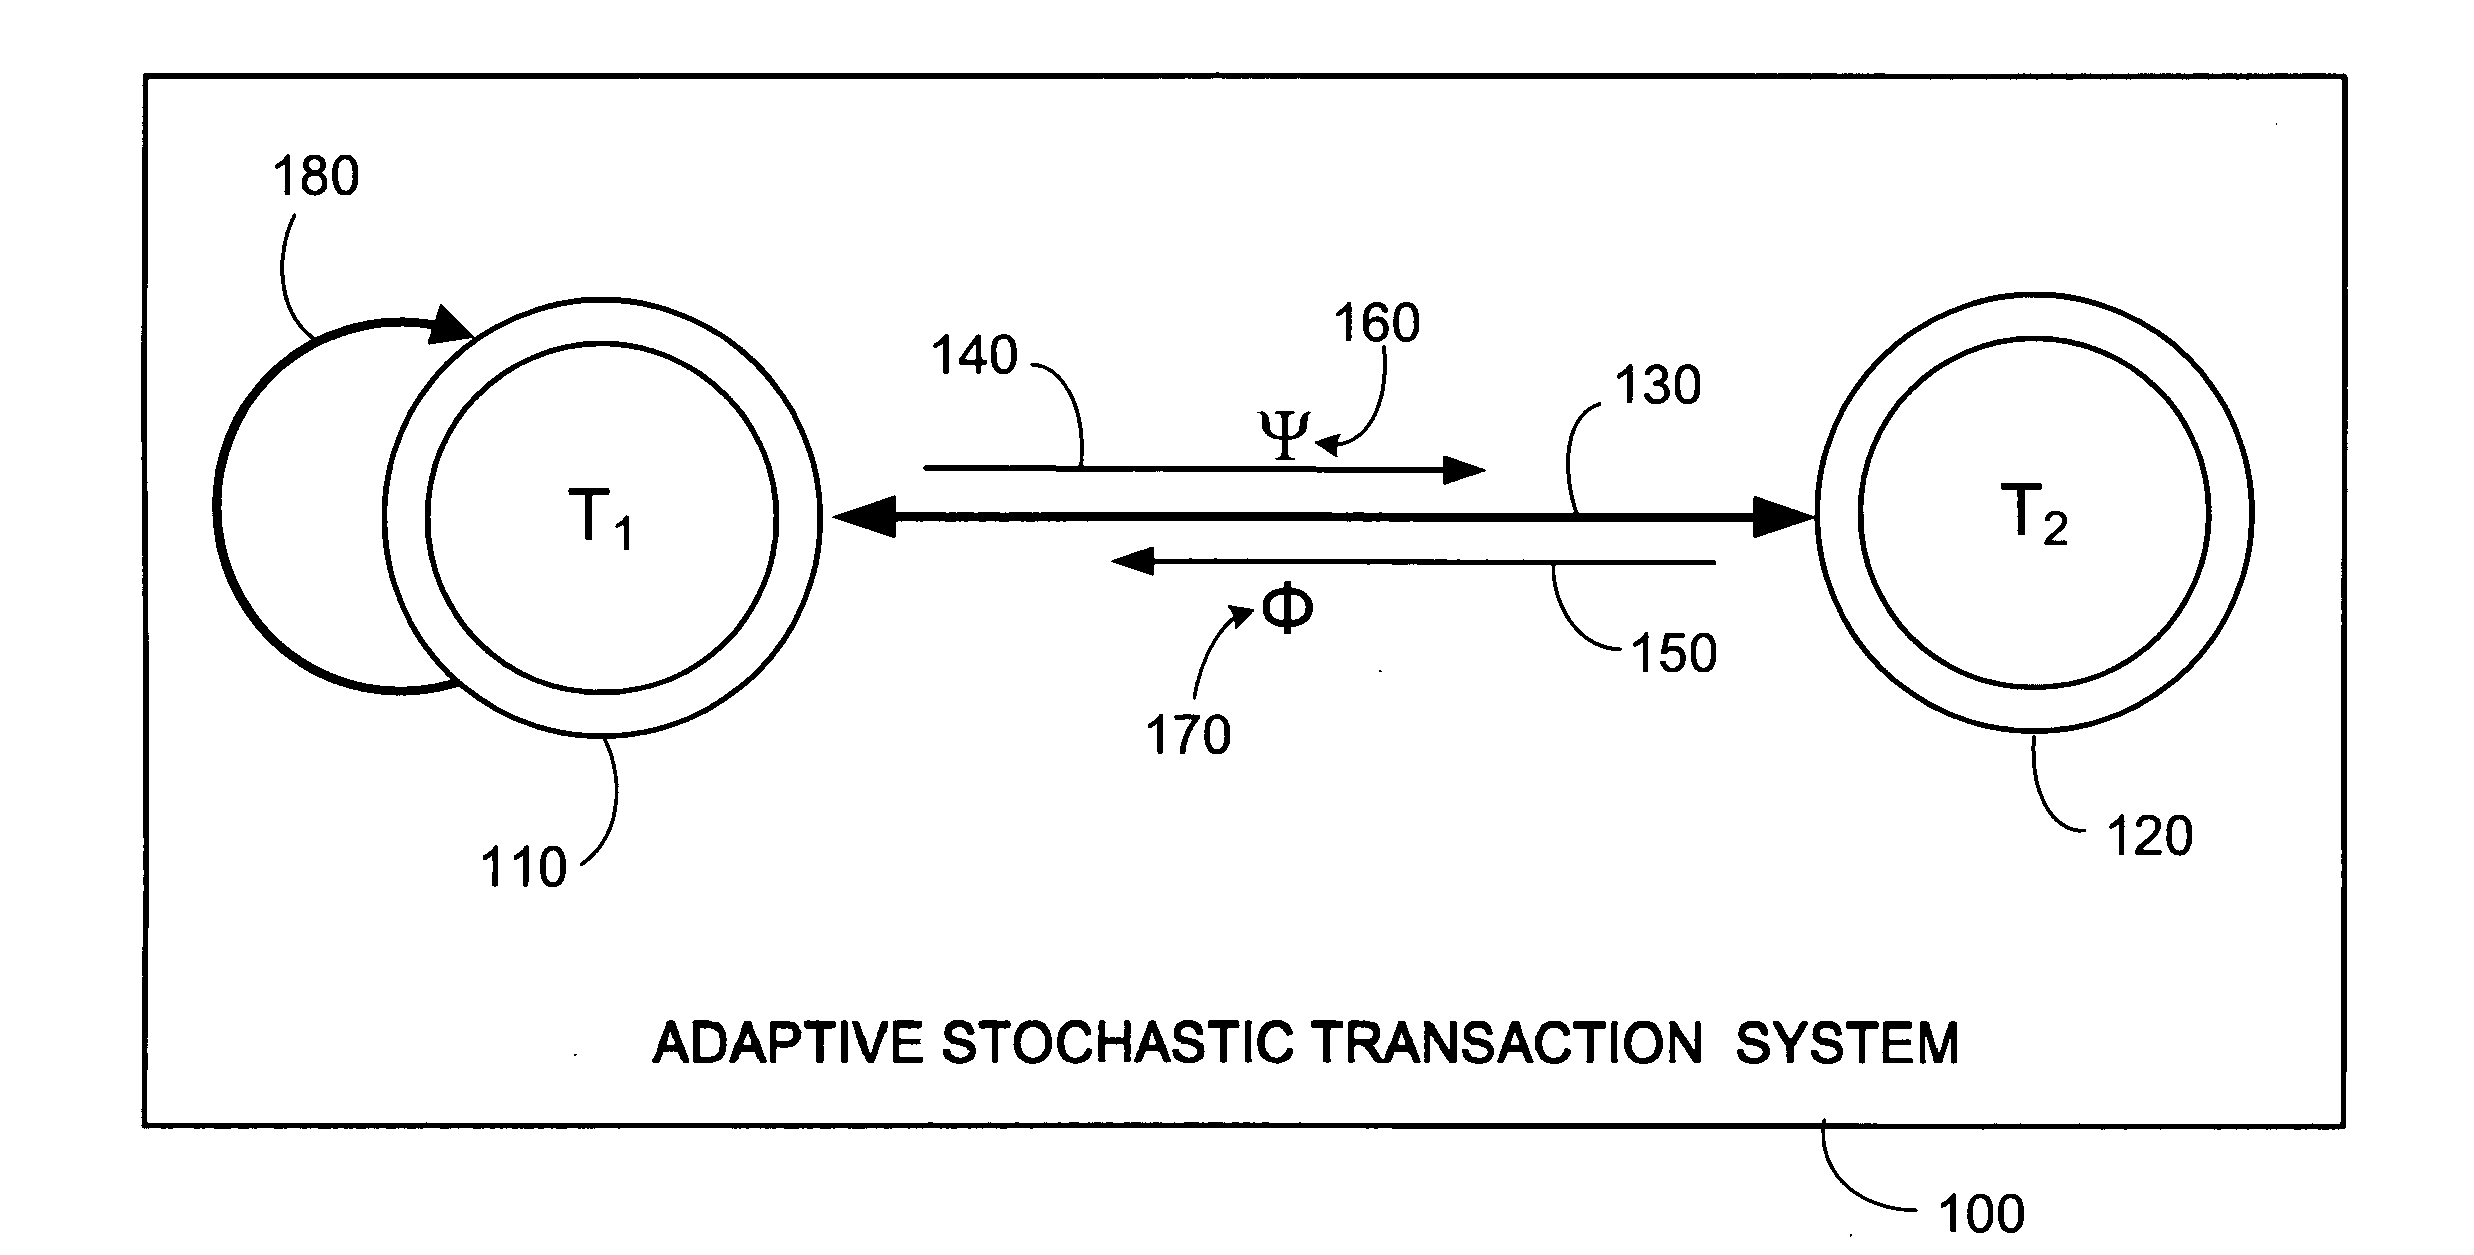 Adaptive stochastic transaction system